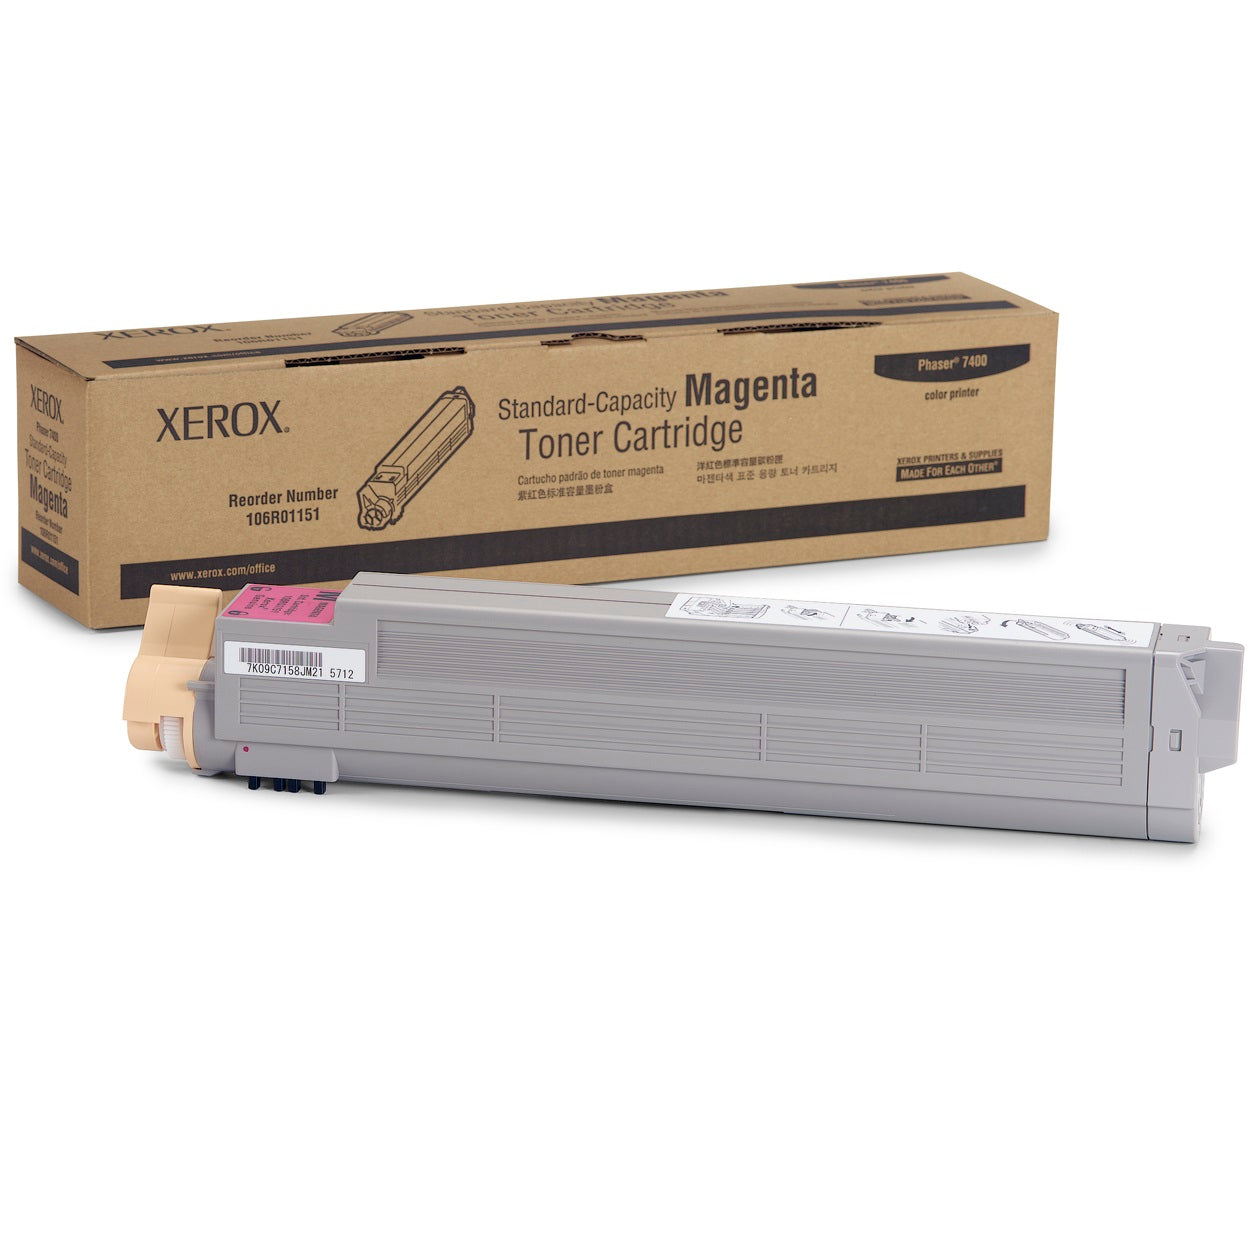 Absolute Toner XEROX 106R01151 Genuine Magenta Toner Cartridge For Xerox Phaser 7400 Color Laser Printer Original Xerox Cartridges